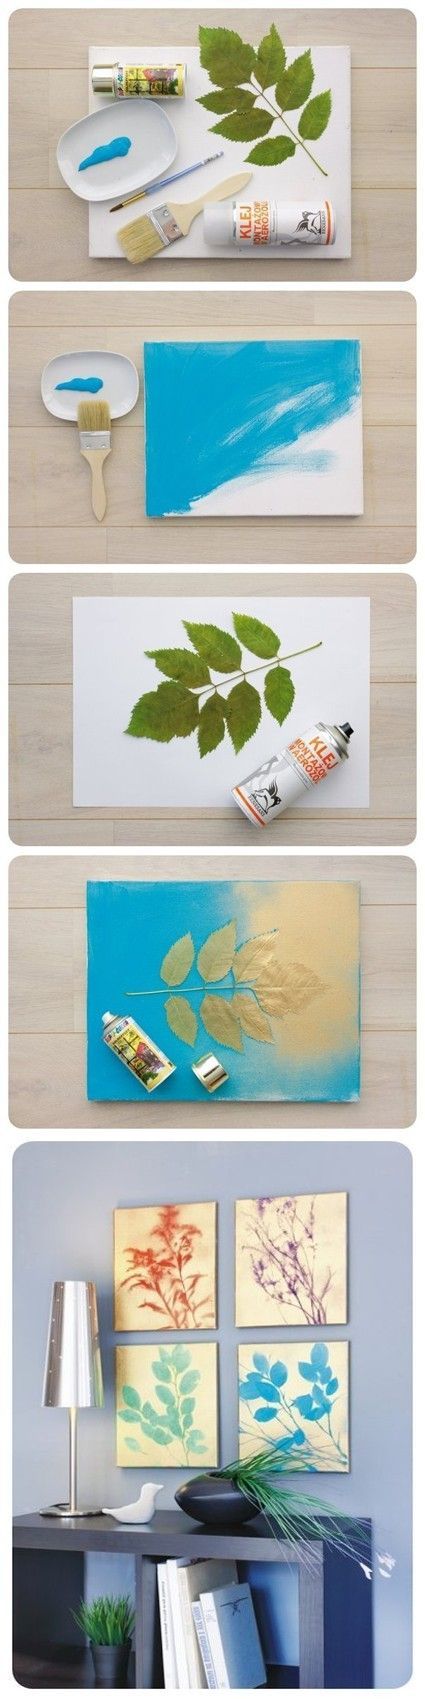 DIY spray paint plant pictures